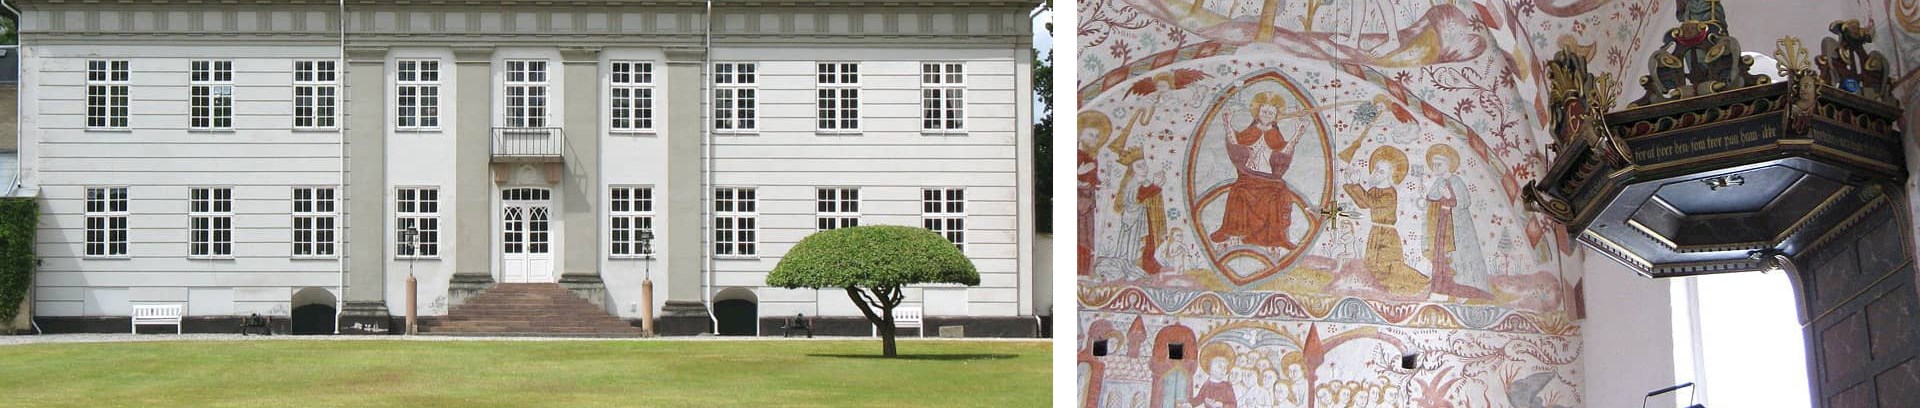 Corselitze Gods og kalkmalerier i Fanefjord kirke - tur til sydhavsøerne med FOF Aarhus